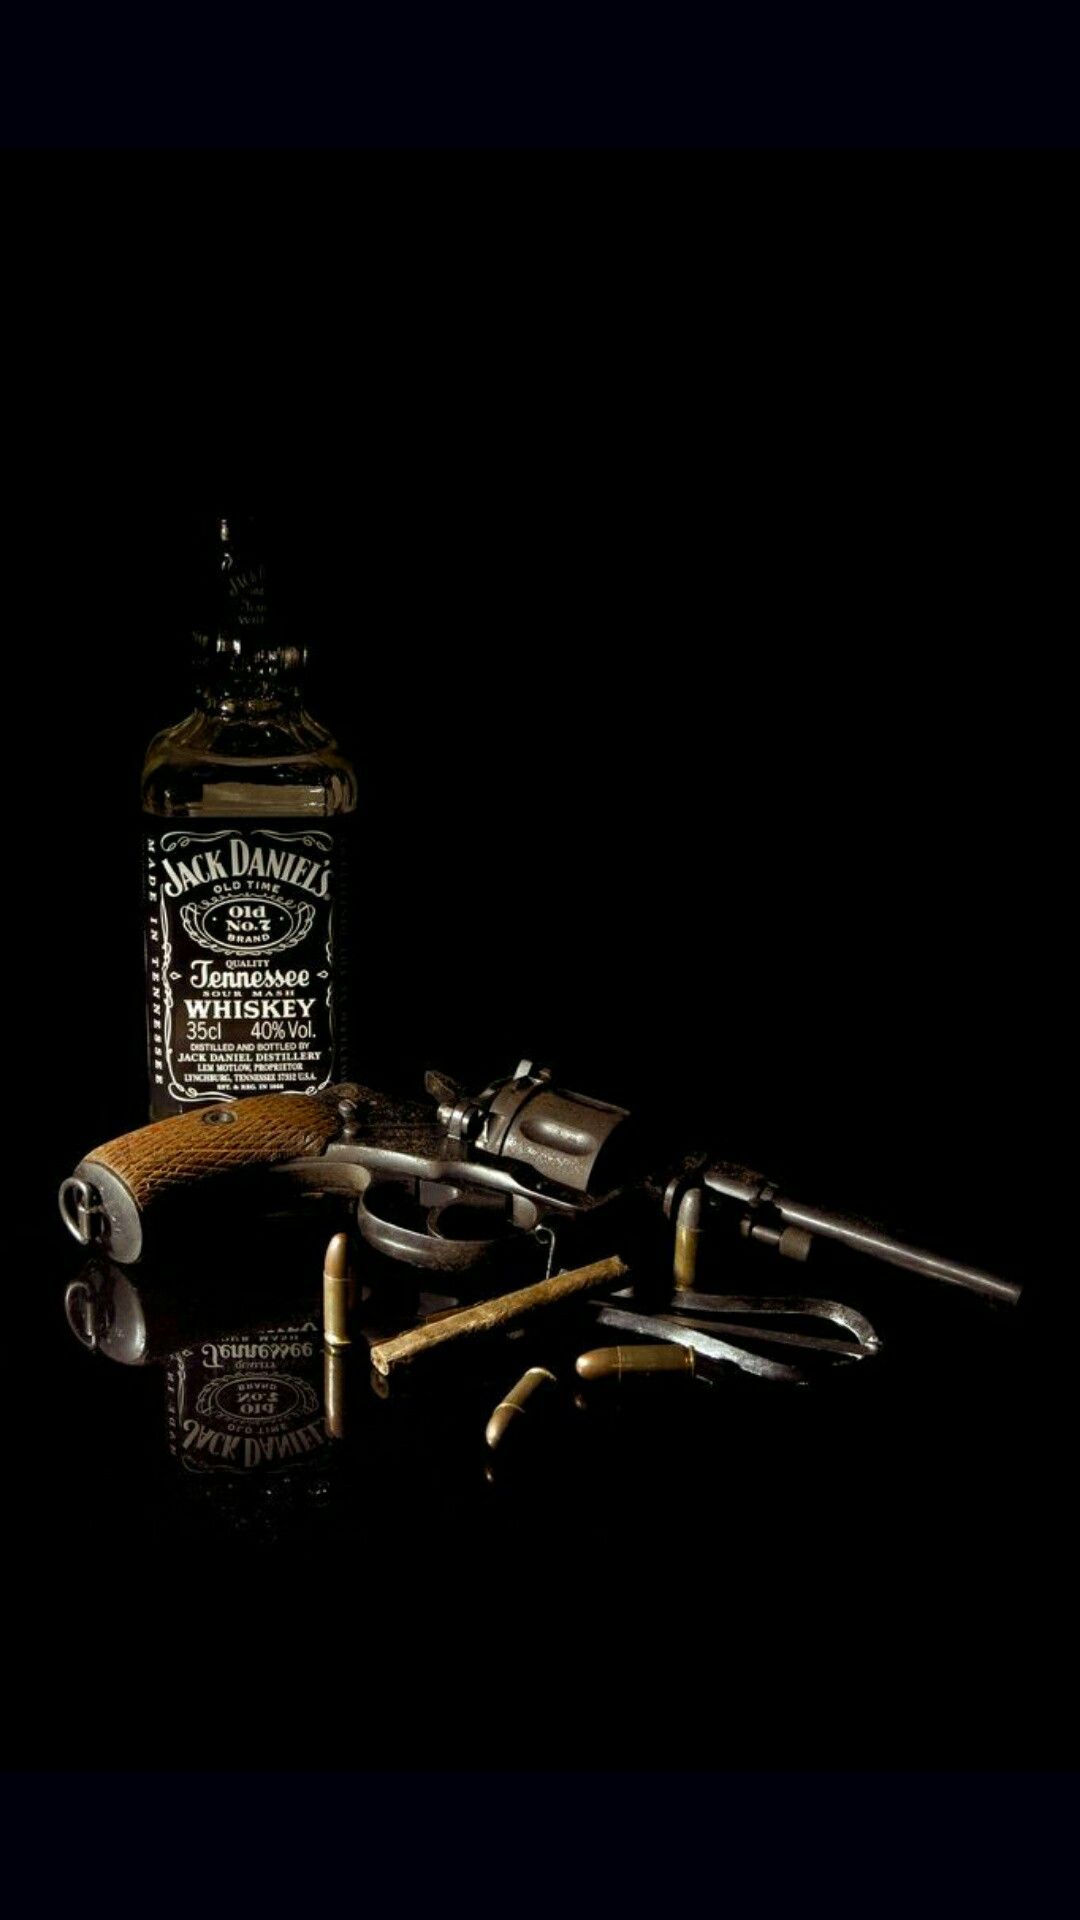 Jack Daniel's Whiskey Sour Mash Old No. 7 Black Label - 1080x1920 Wallpaper  